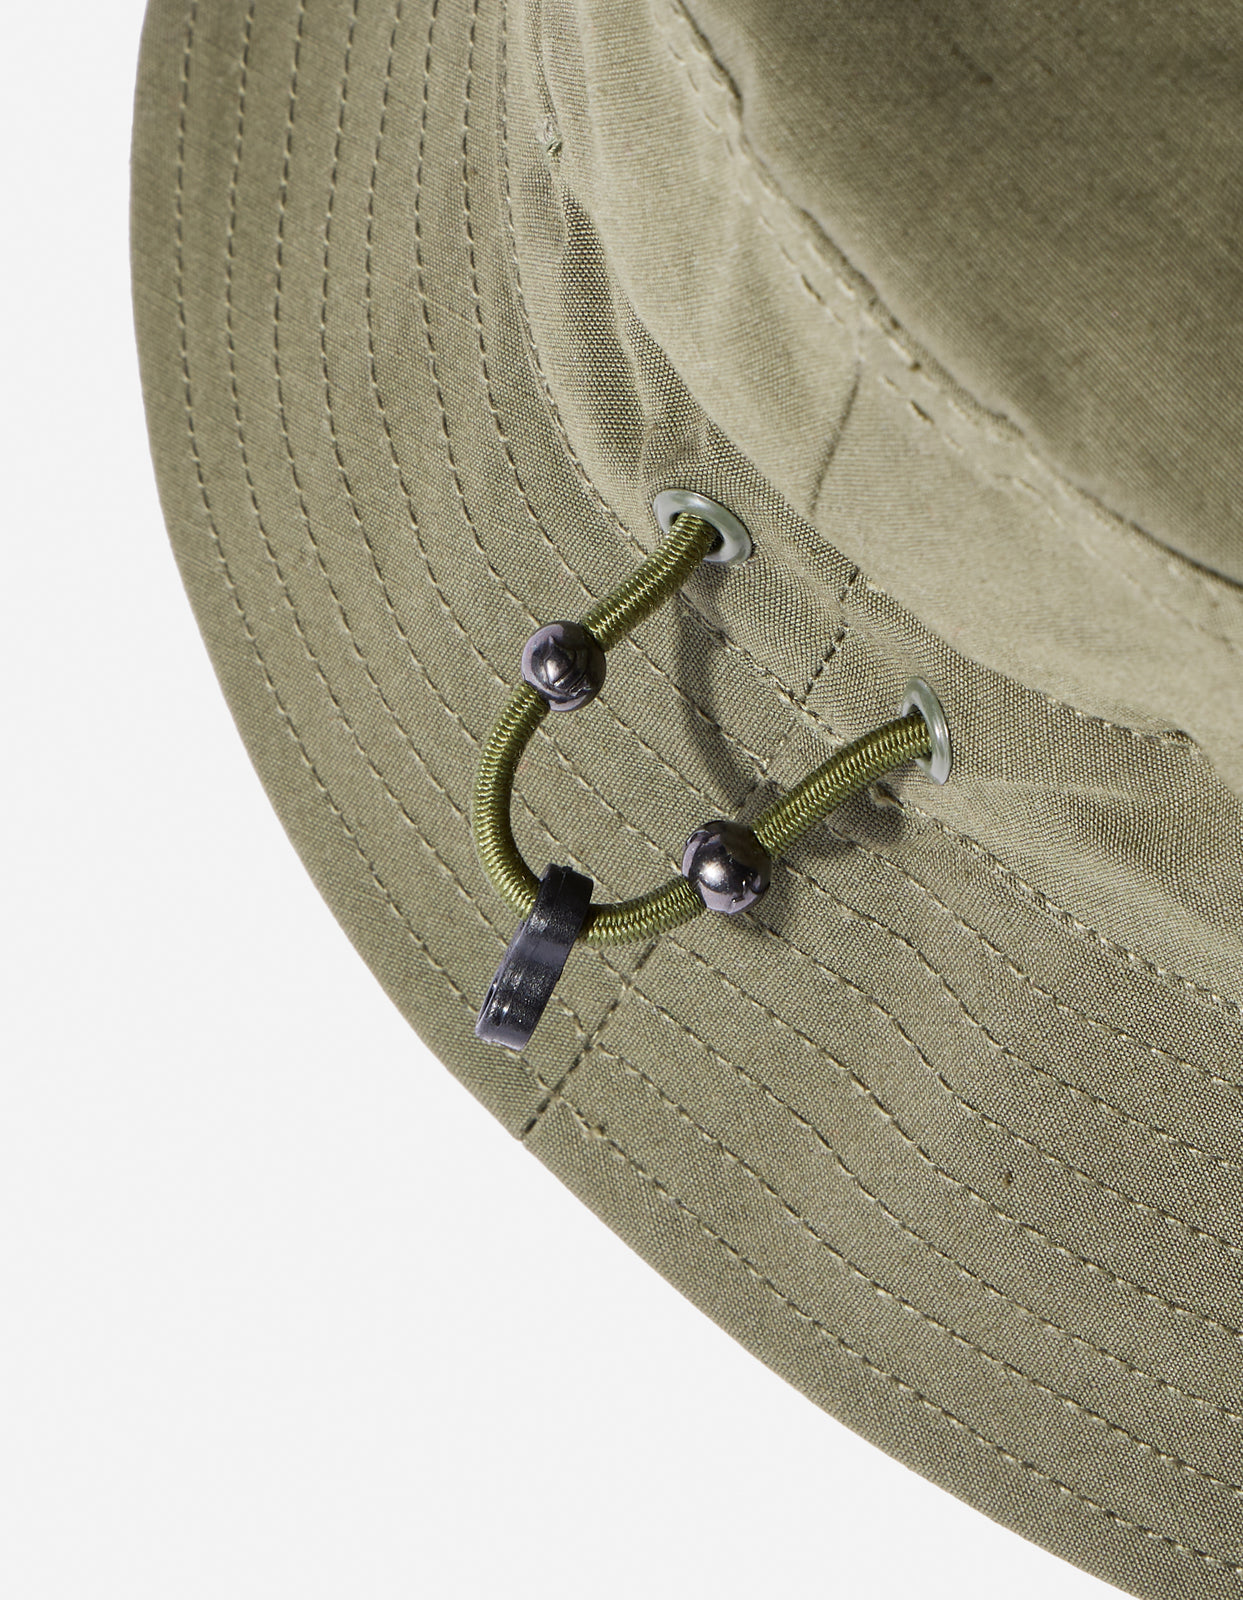 4110 Ventile® WR Bucket Hat Olive